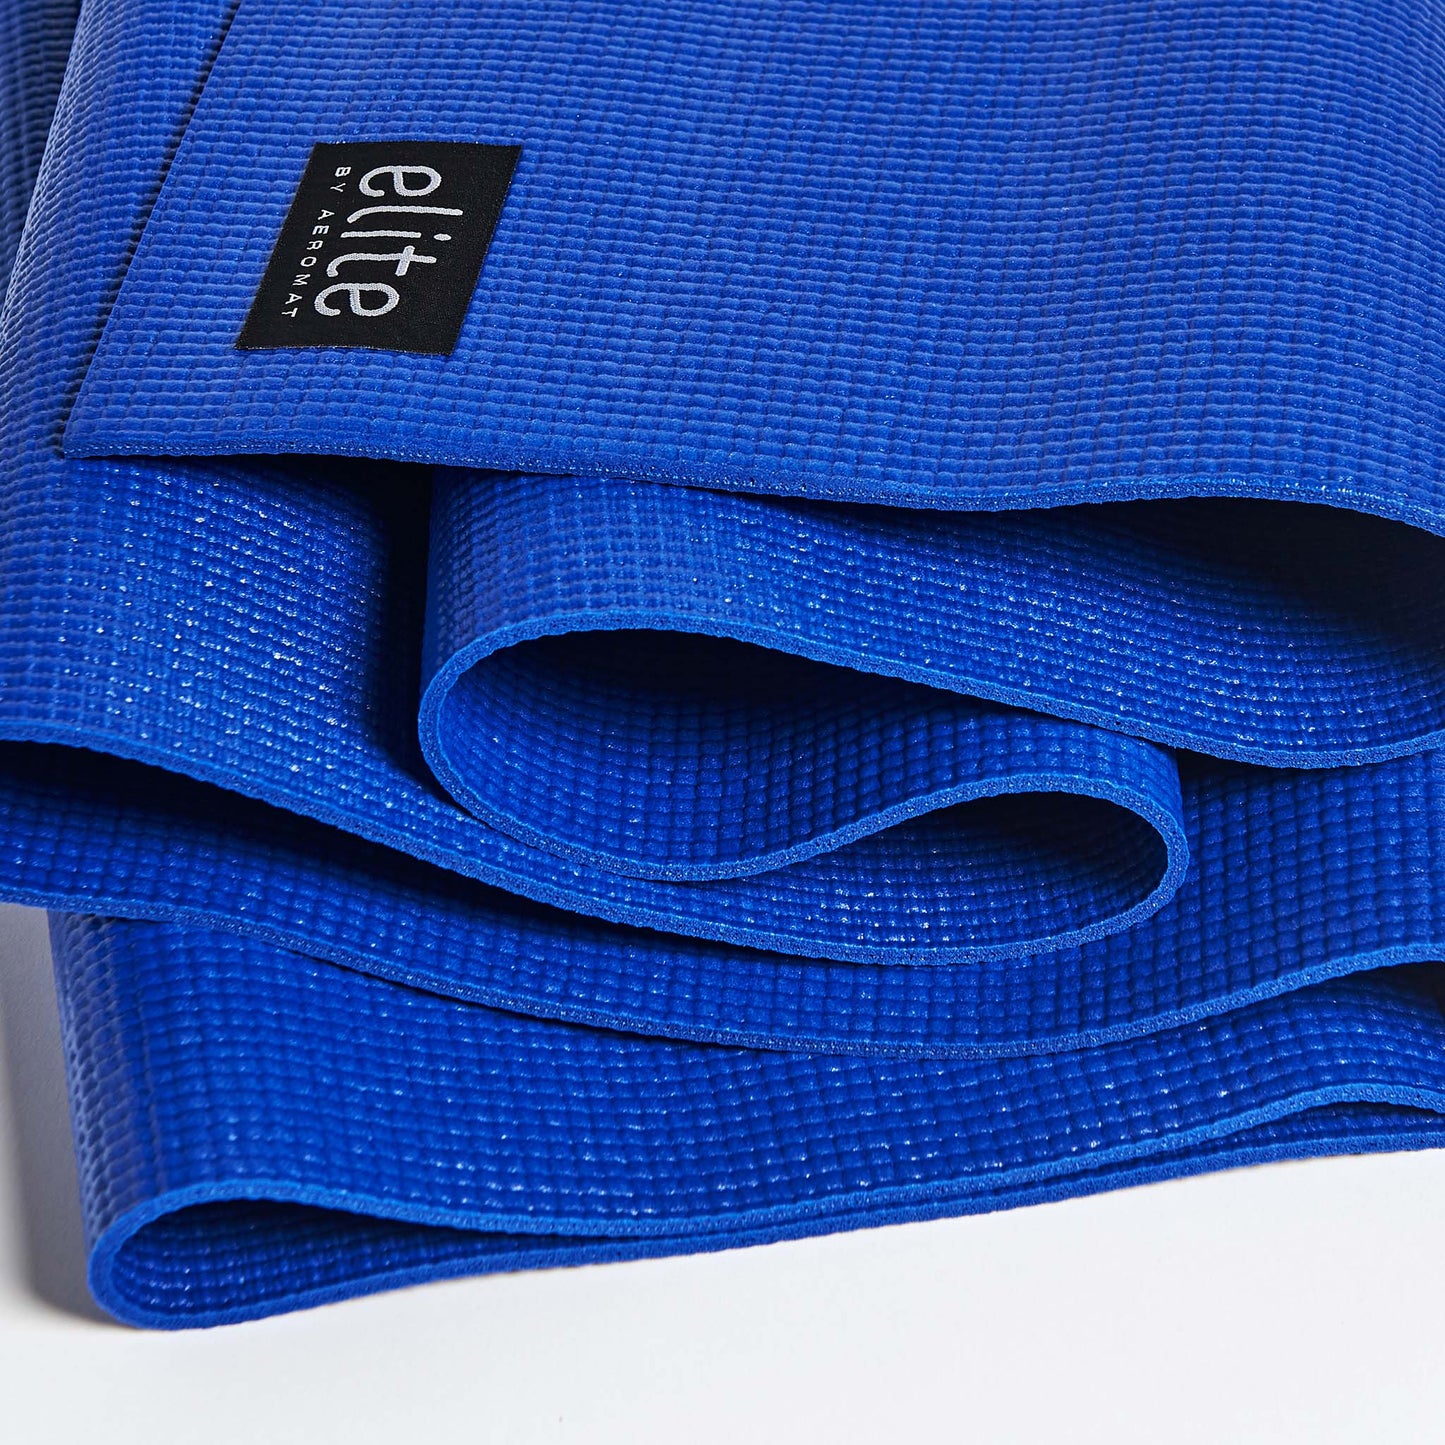 Jstyle DoSports Yoga Mat - Light Blue